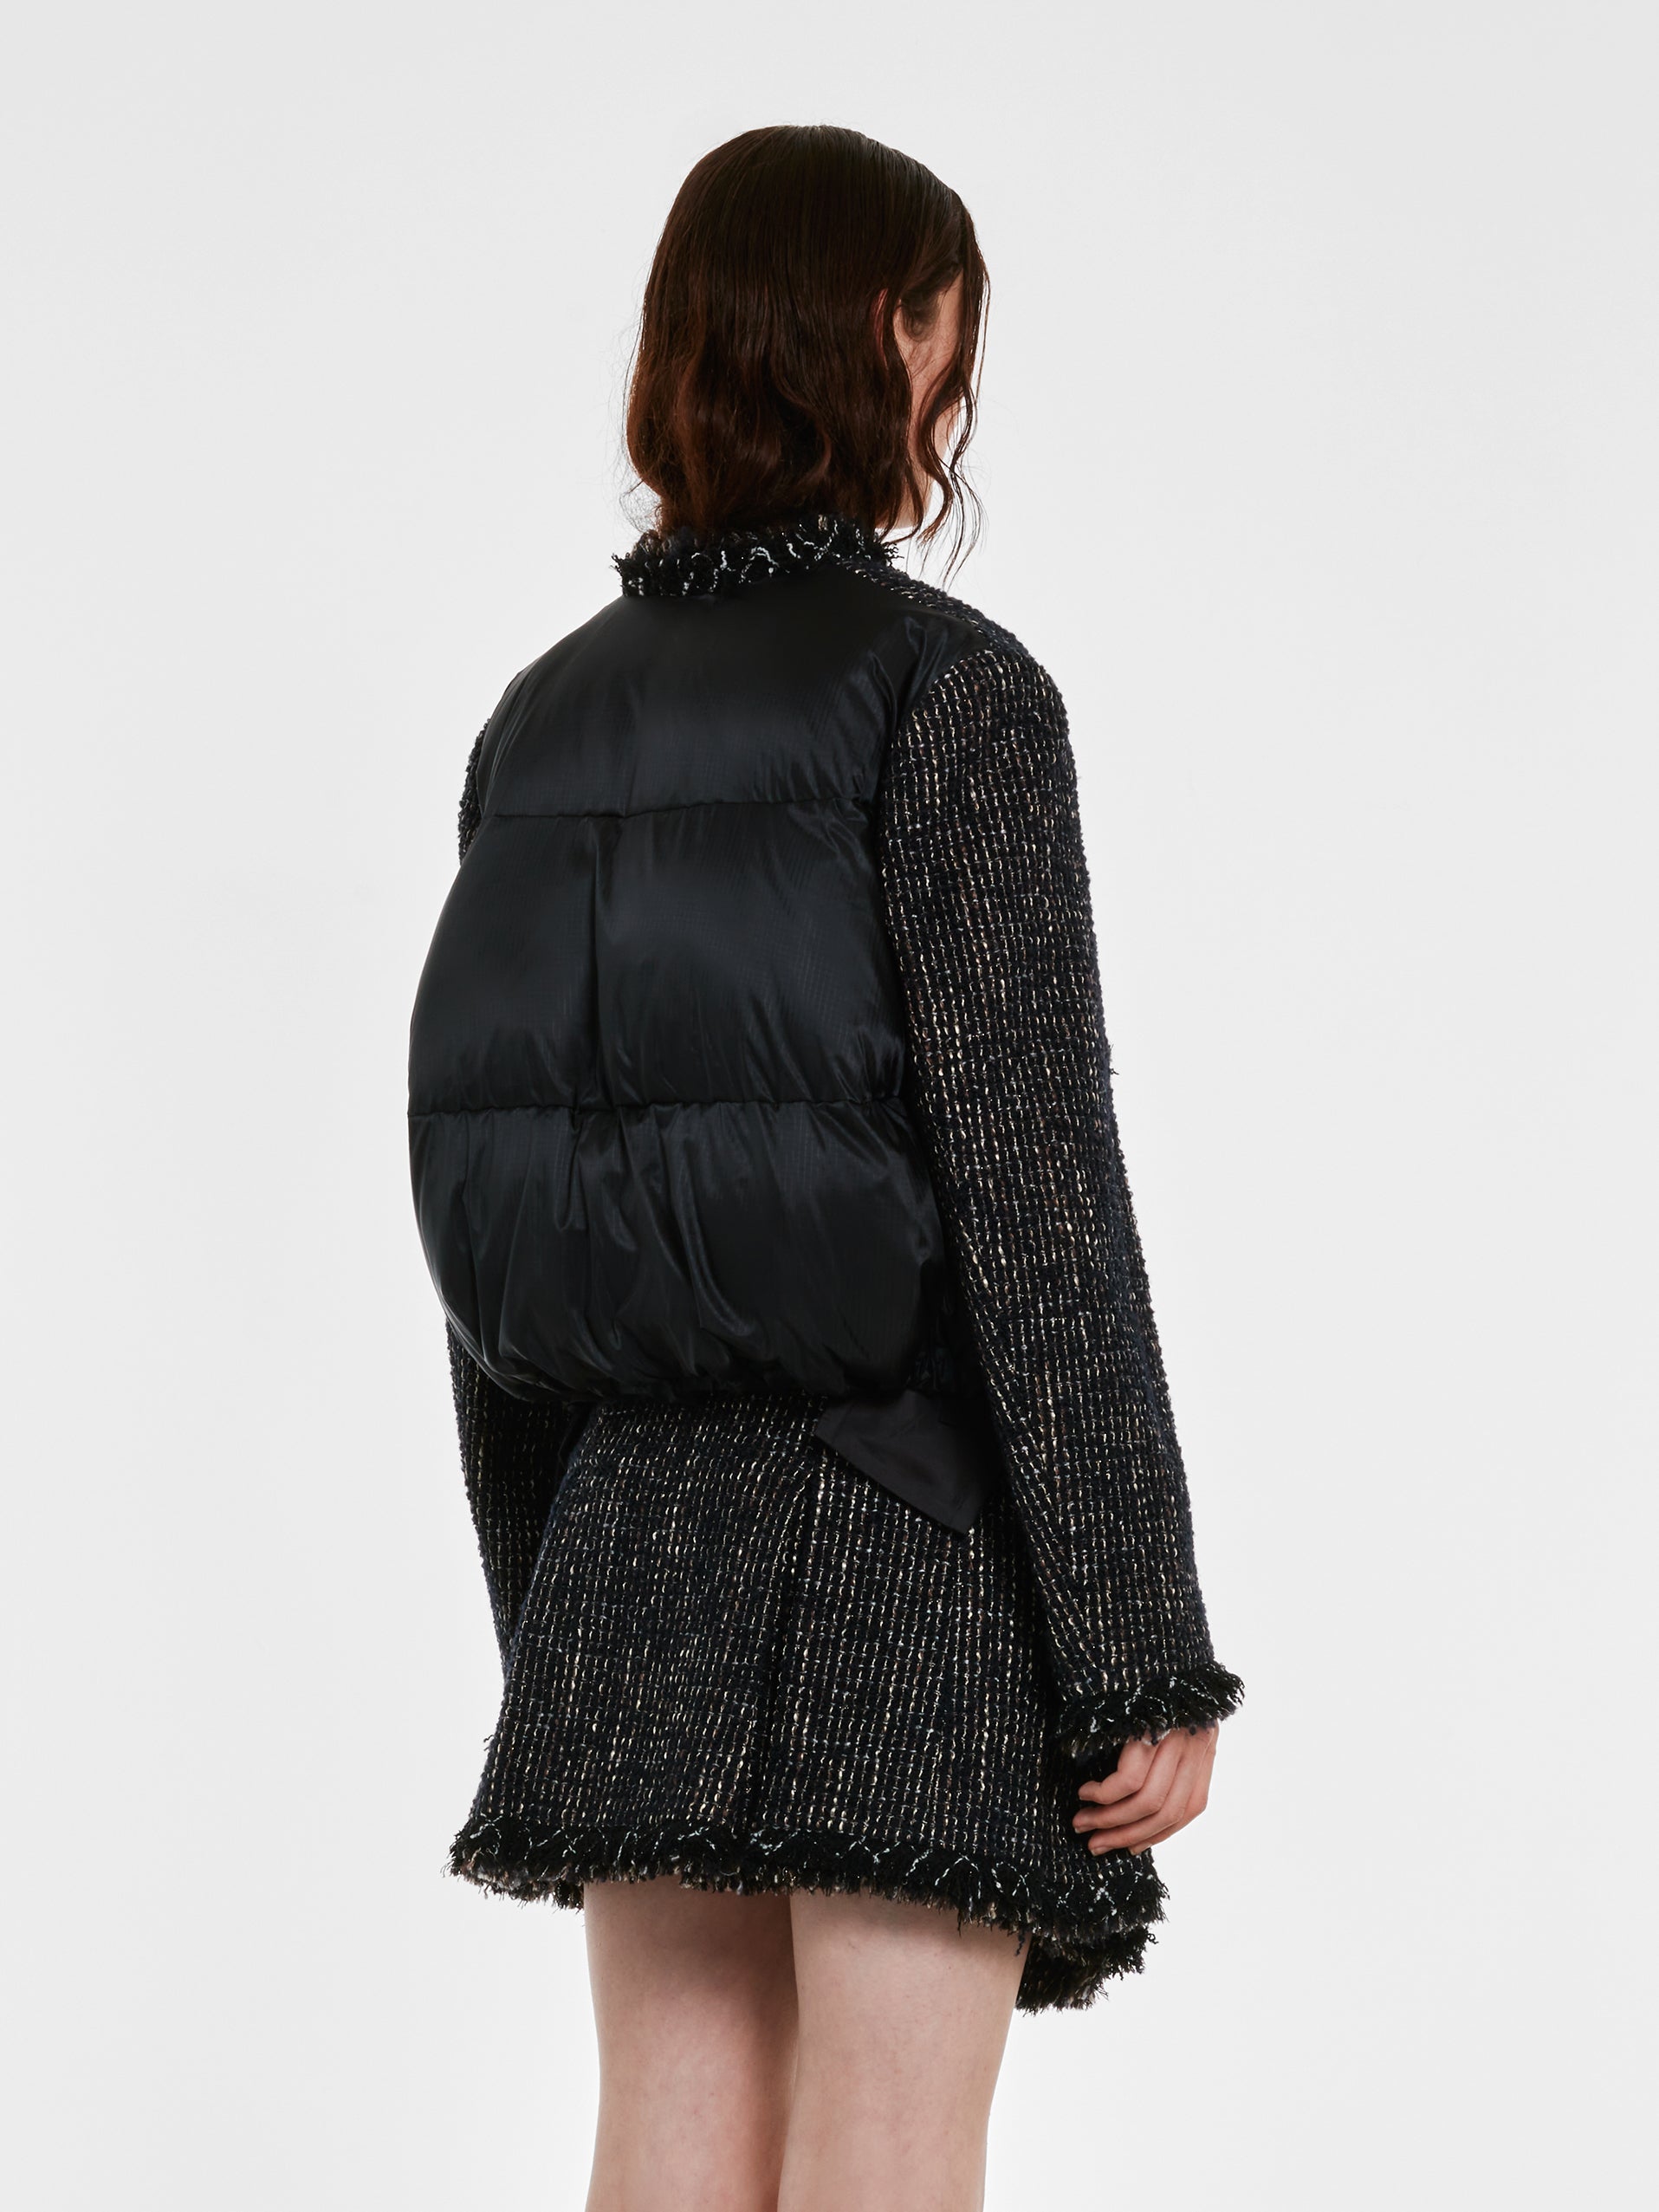 sacai - Women’s Tweed Jacket - (Black) view 4